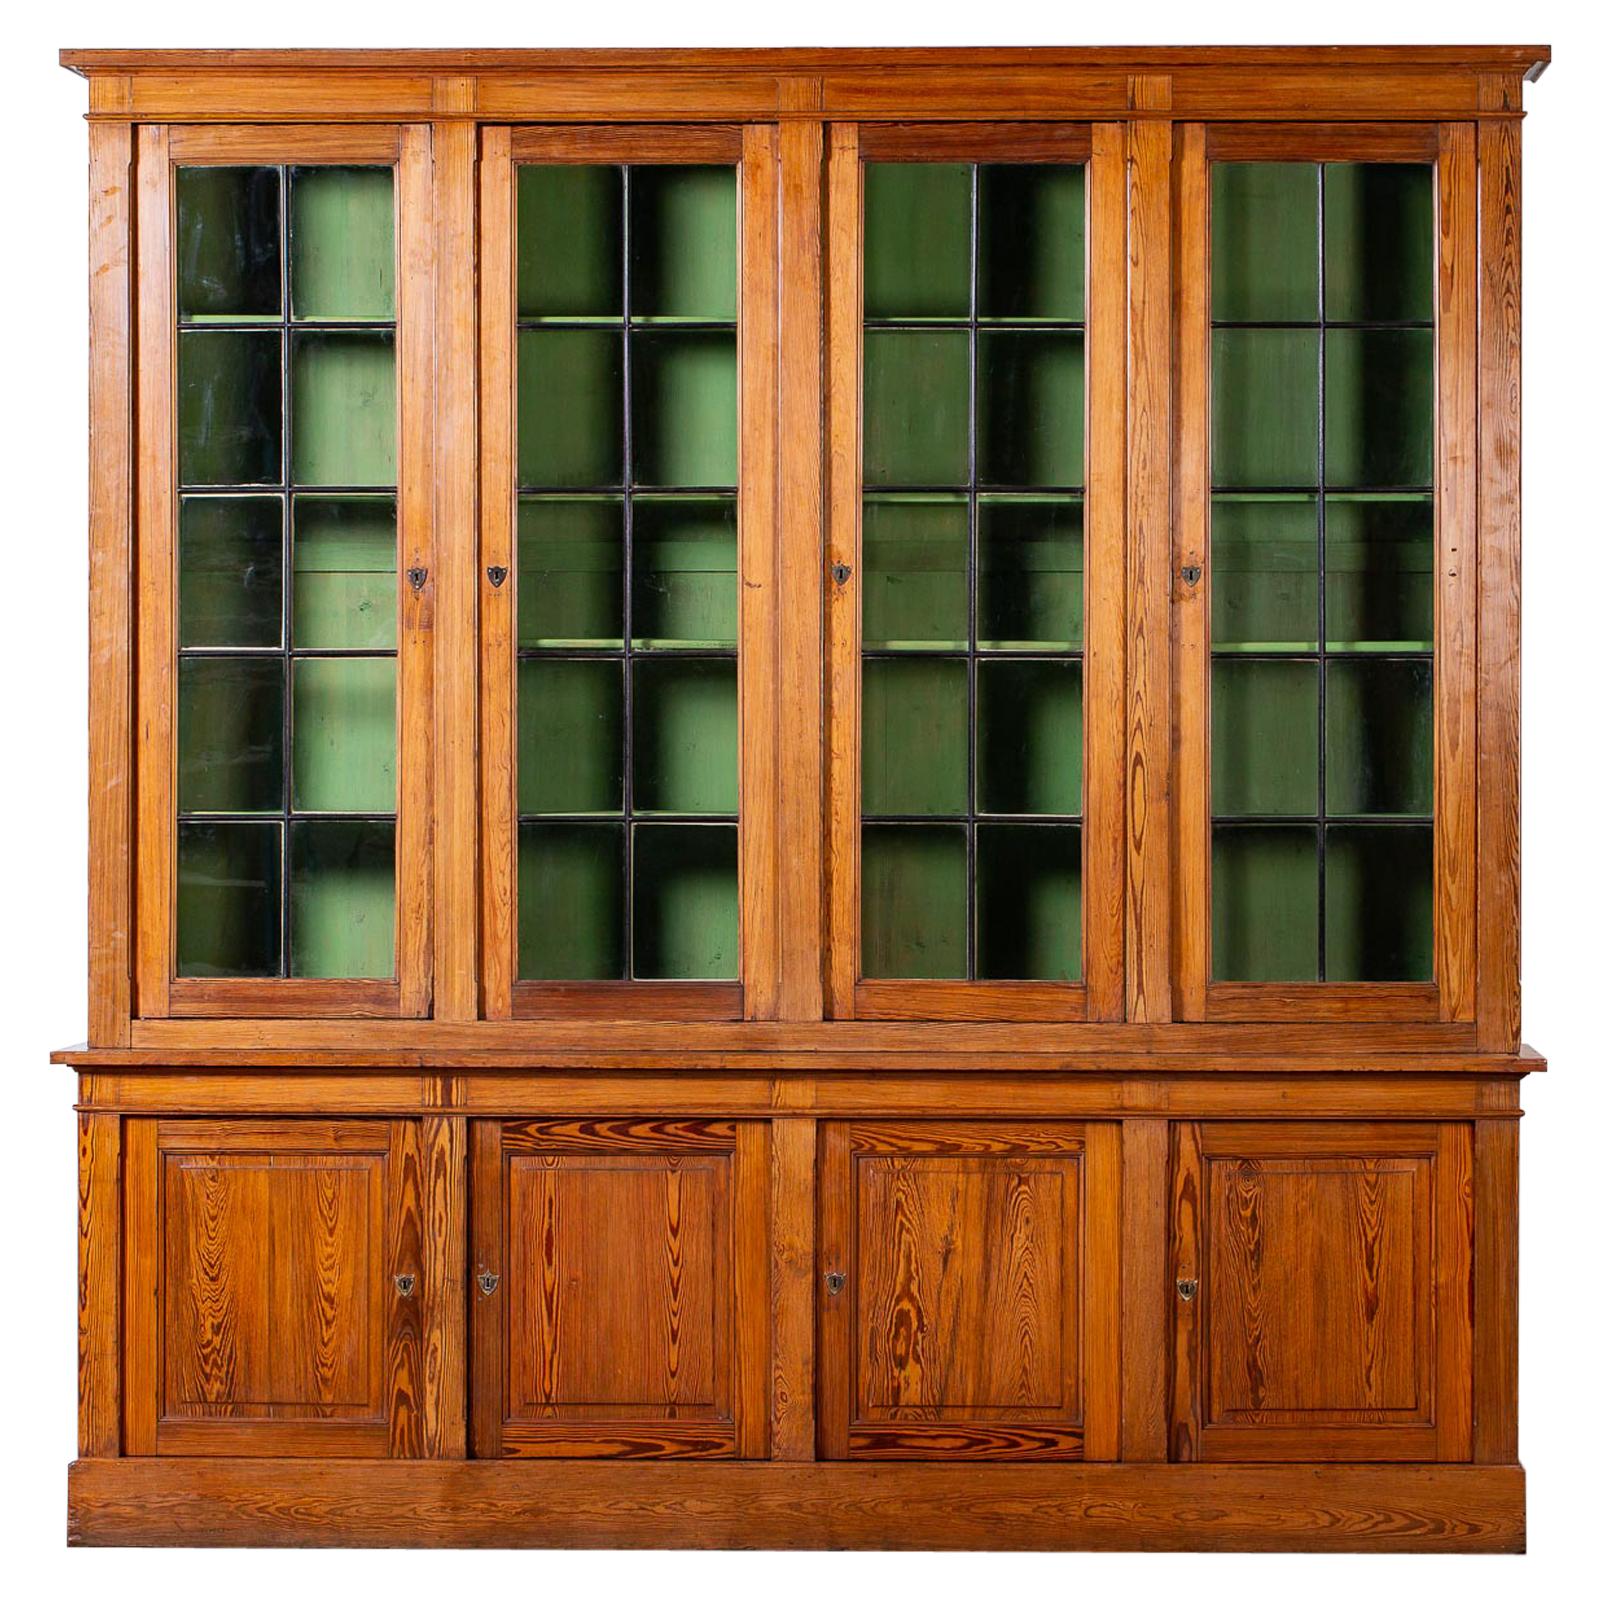 Enormous Antique French Pine Bibliothèque Bookcase Display Cabinet, circa 1850